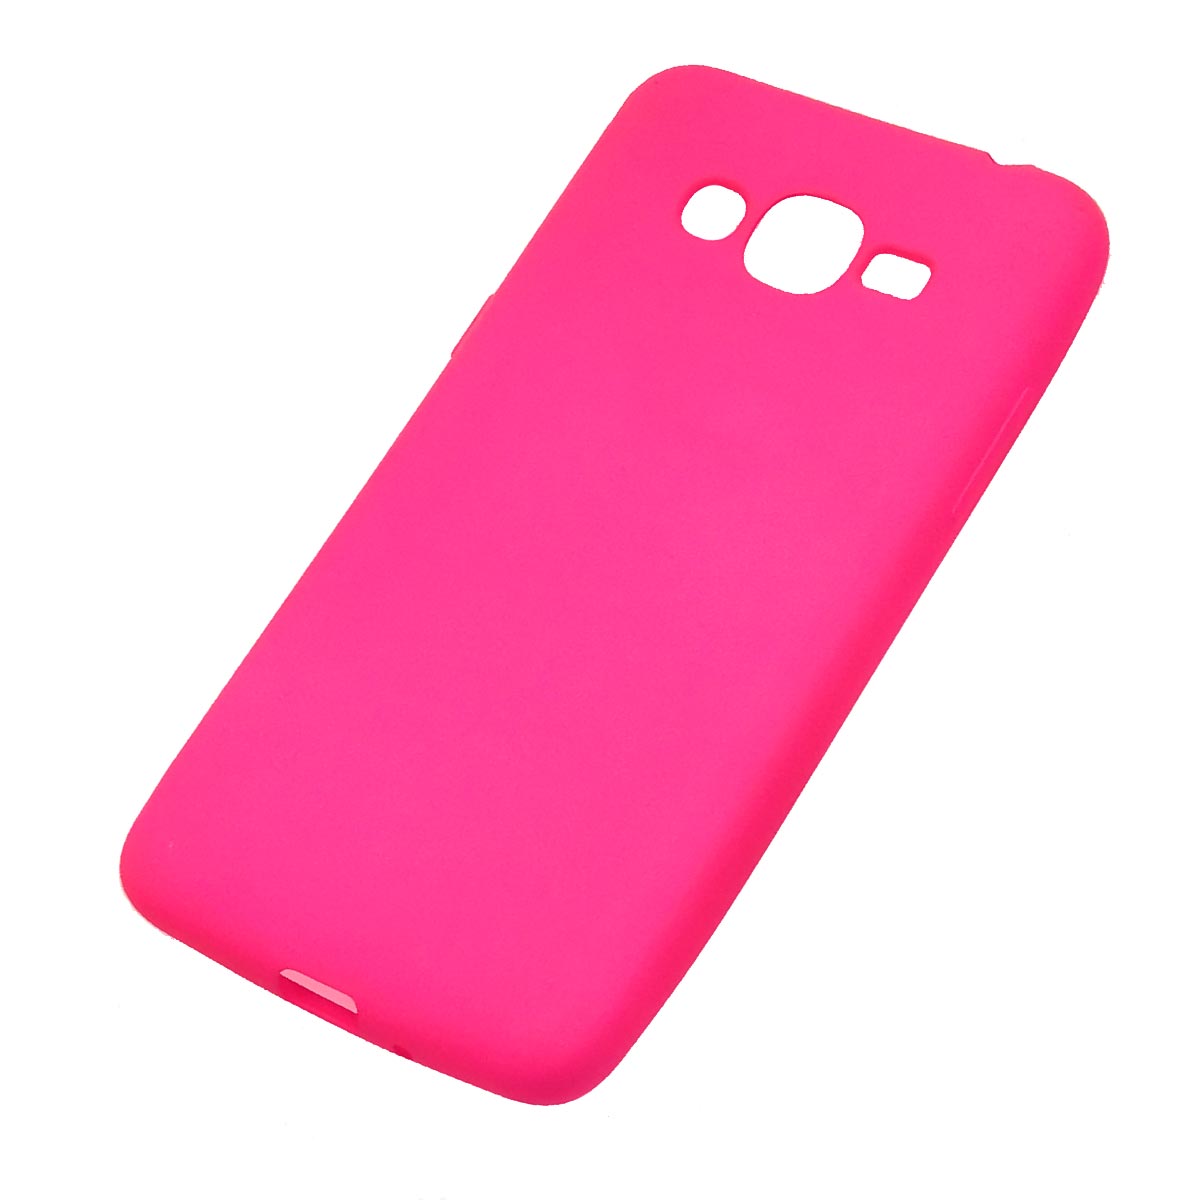 Чехол накладка Fashion для SAMSUNG Galaxy J2 Prime (SM-G532), силикон, цвет розовый